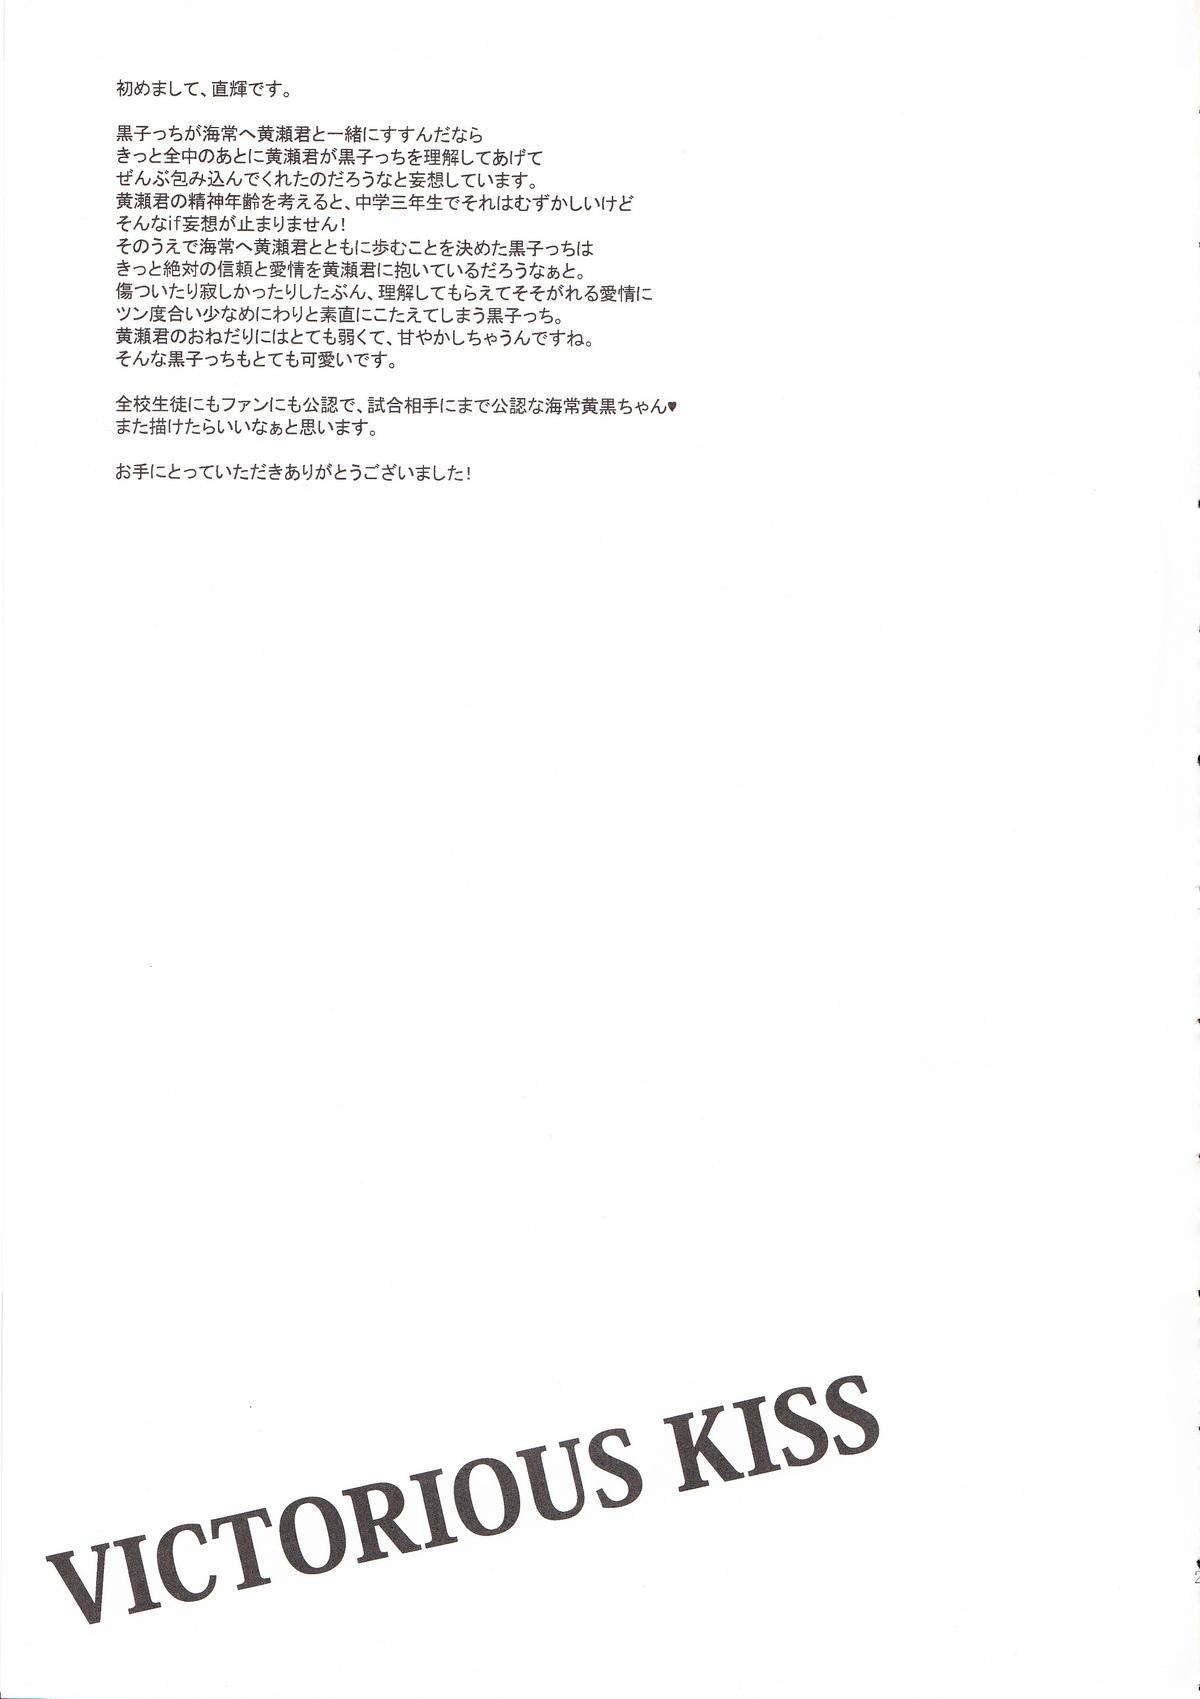 Body VICTORIOUS KISS - Kuroko no basuke Prostituta - Page 23